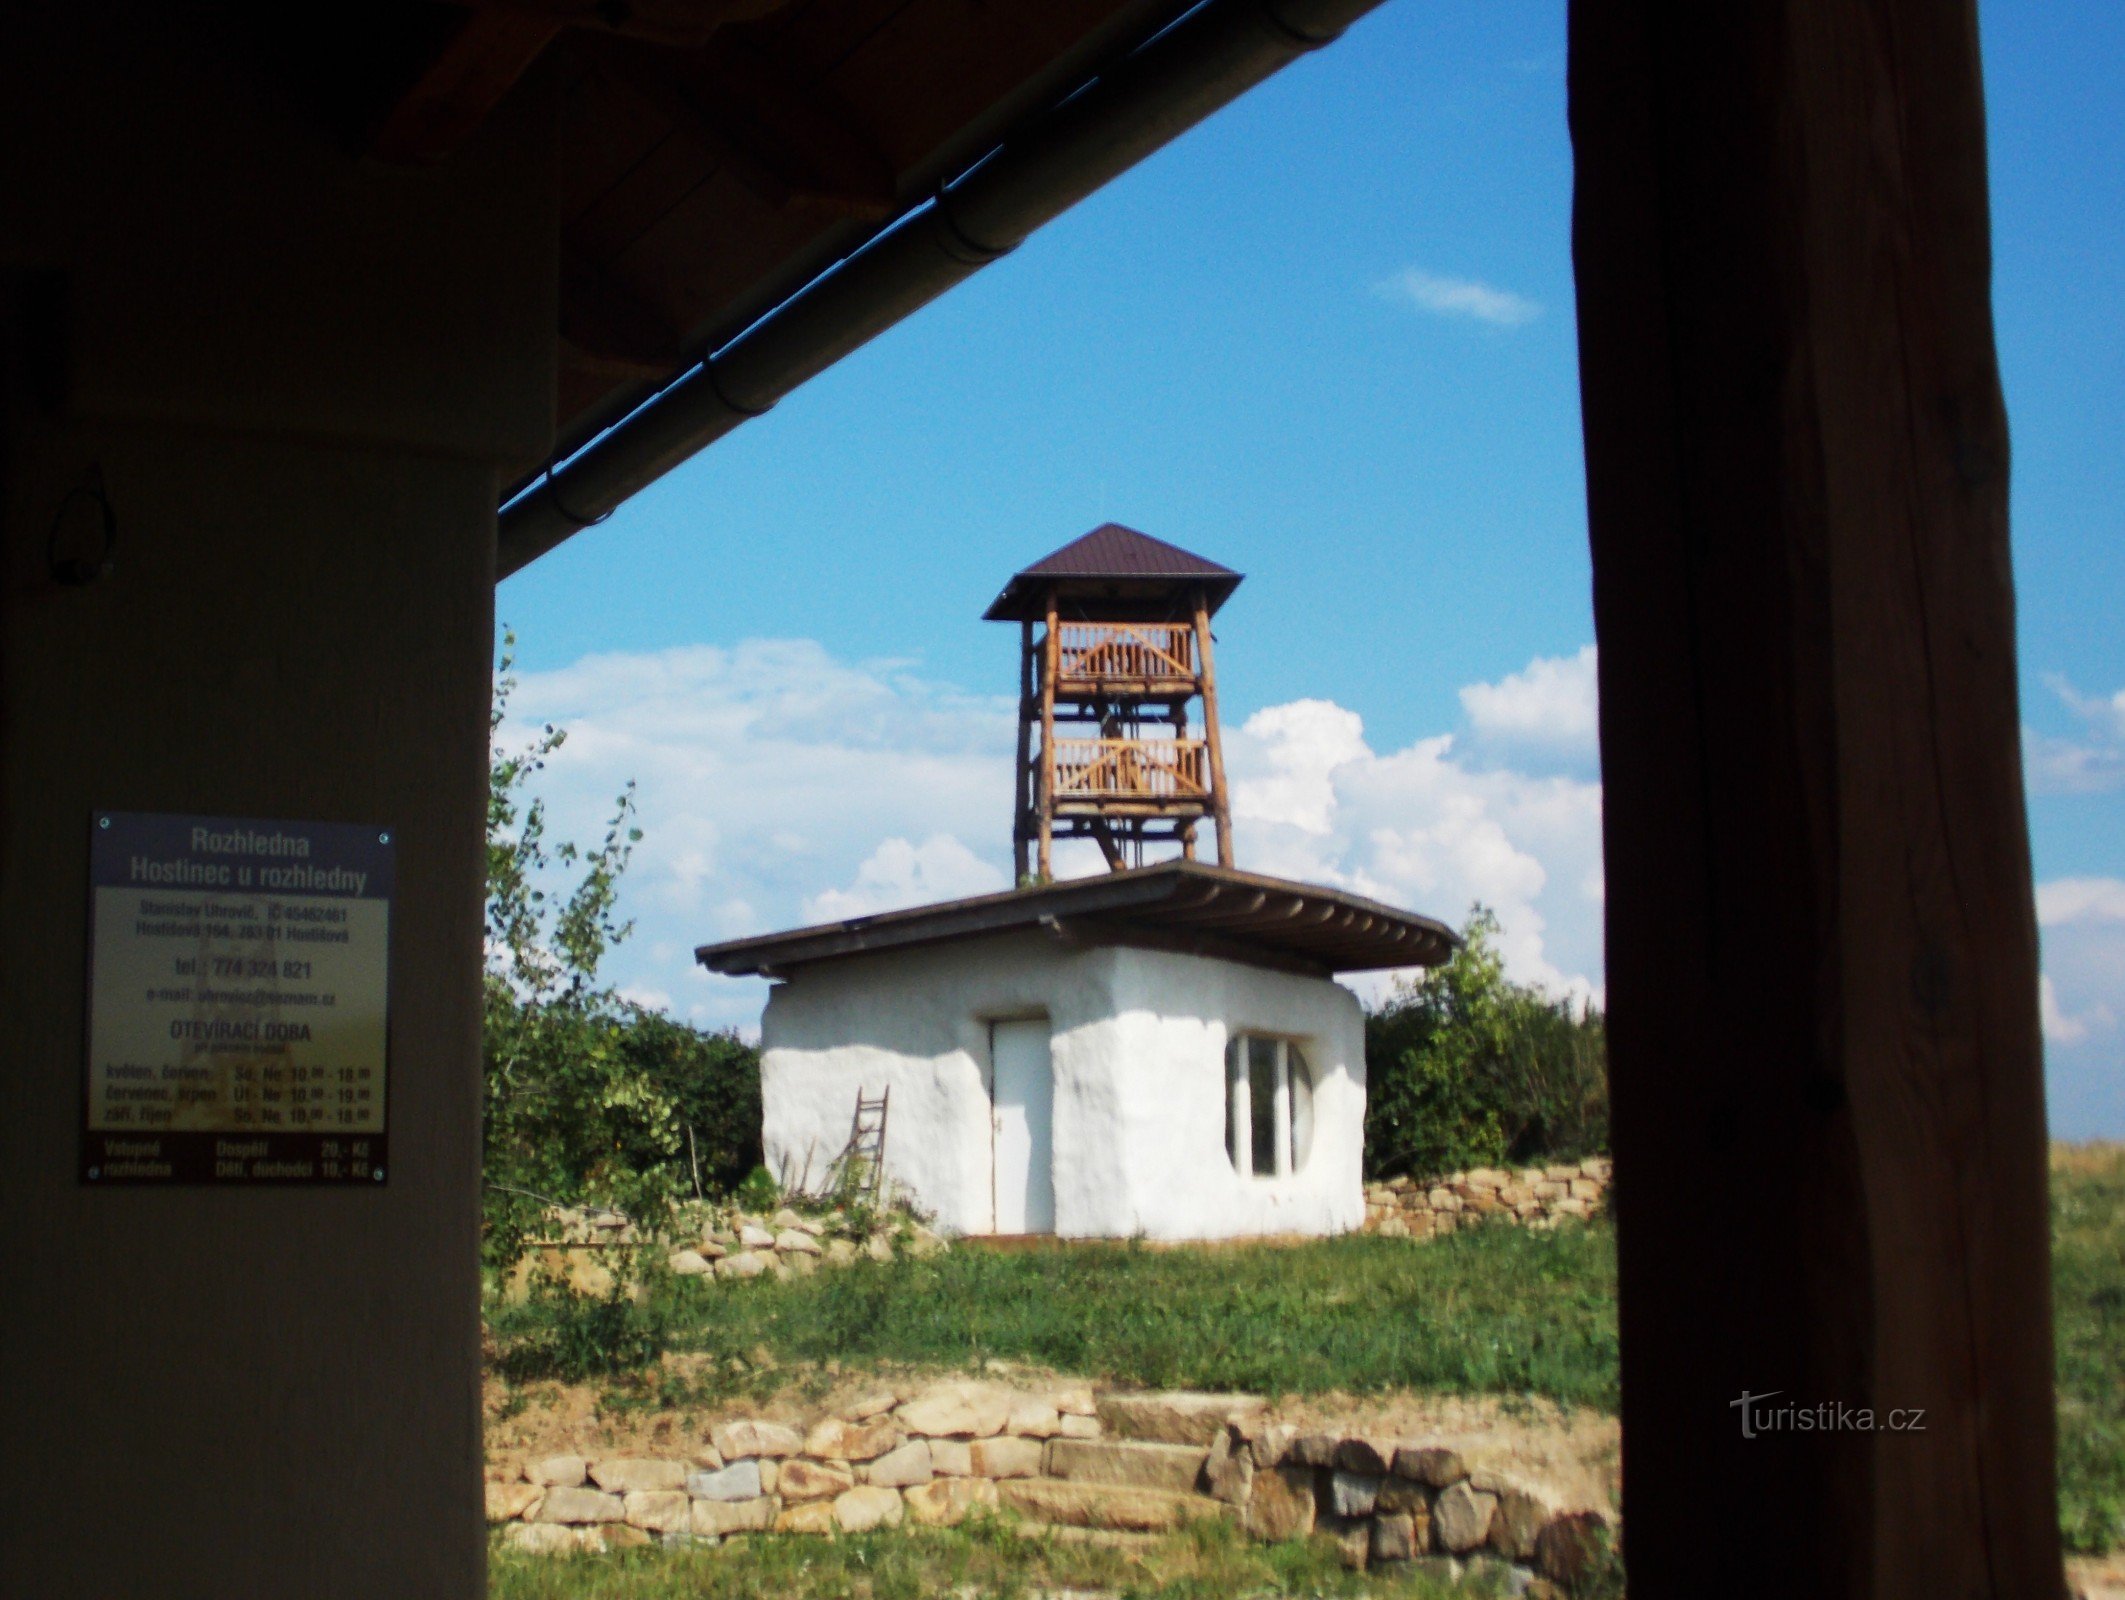 Travel pub by the lookout tower on Hostišová